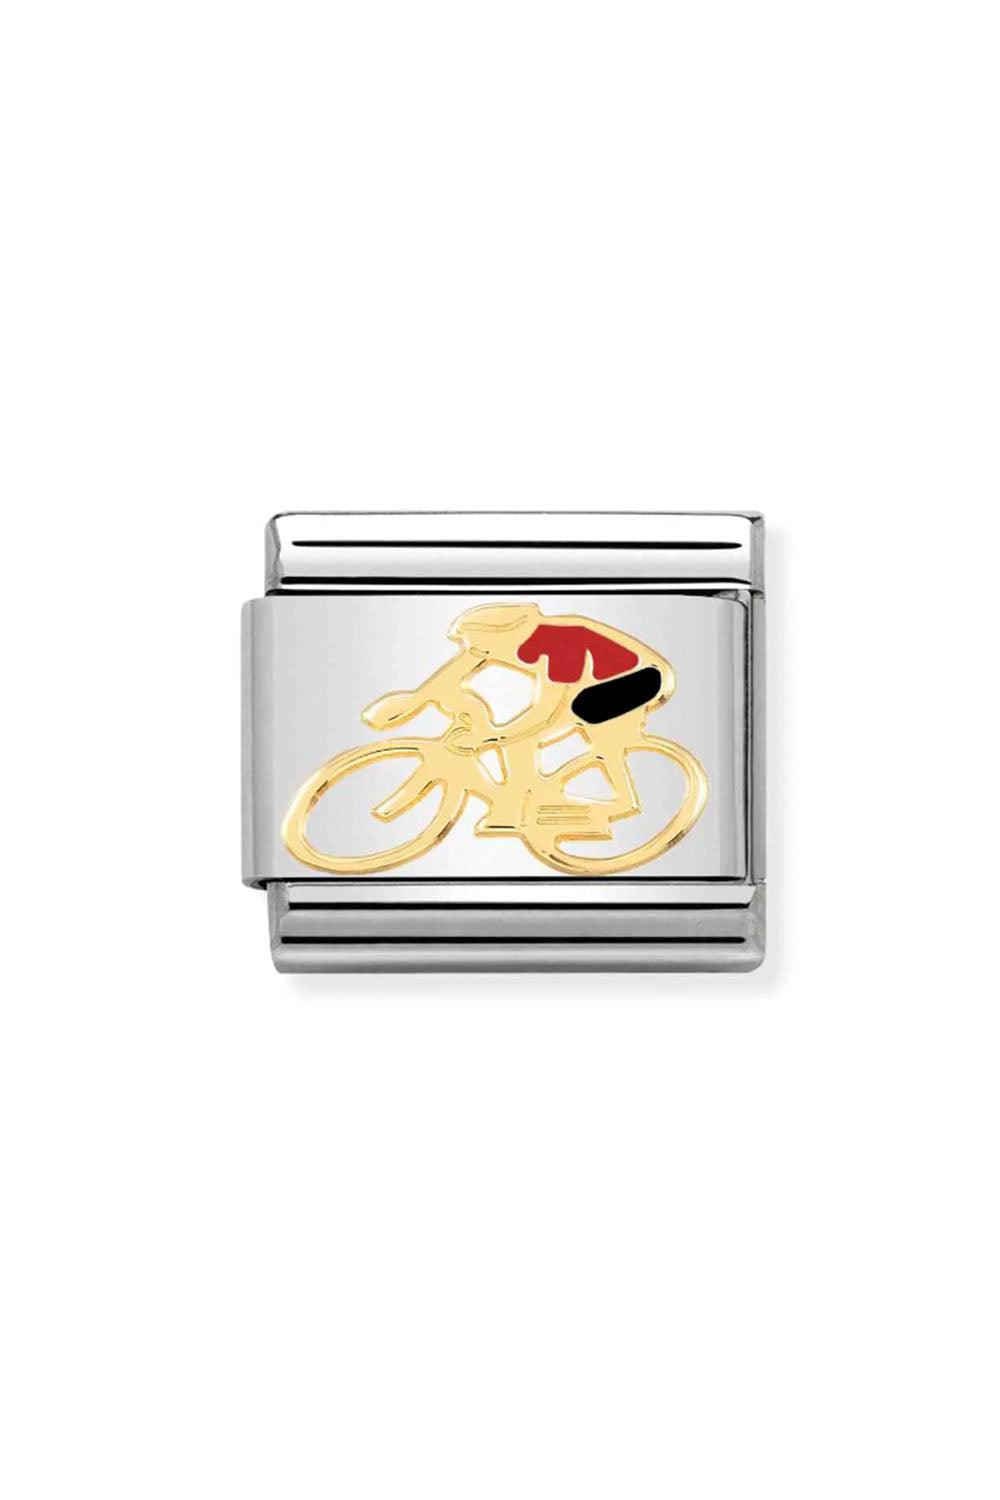 SPORTS 18k Gold & enamel Cyclist red